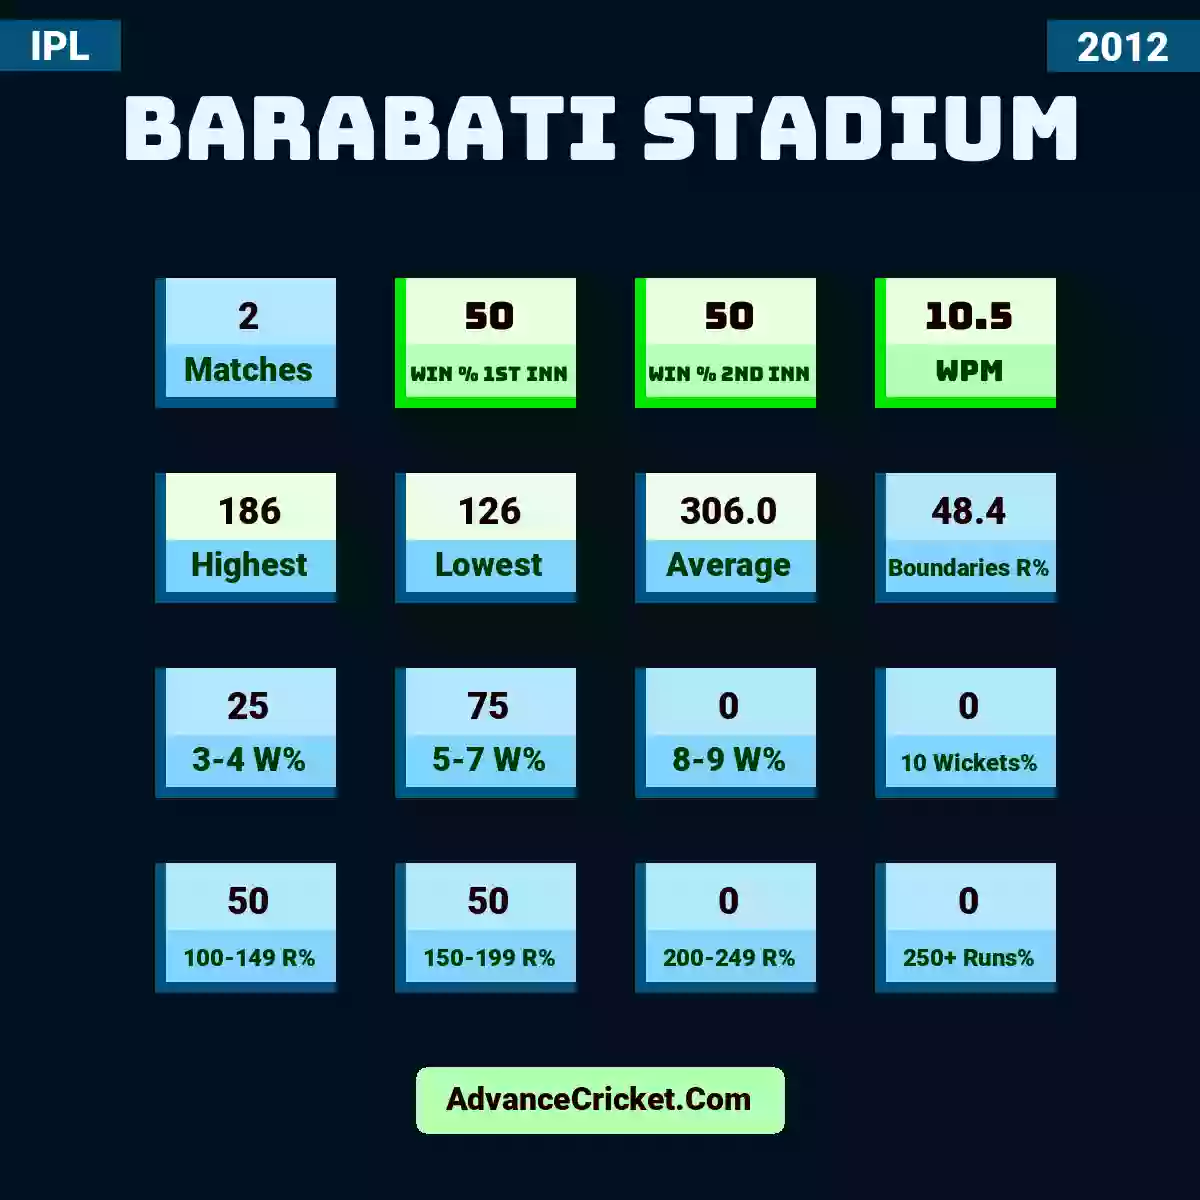 Image showing Barabati Stadium with Matches: 2, Win % 1st Inn: 50, Win % 2nd Inn: 50, WPM: 10.5, Highest: 186, Lowest: 126, Average: 306.0, Boundaries R%: 48.4, 3-4 W%: 25, 5-7 W%: 75, 8-9 W%: 0, 10 Wickets%: 0, 100-149 R%: 50, 150-199 R%: 50, 200-249 R%: 0, 250+ Runs%: 0.